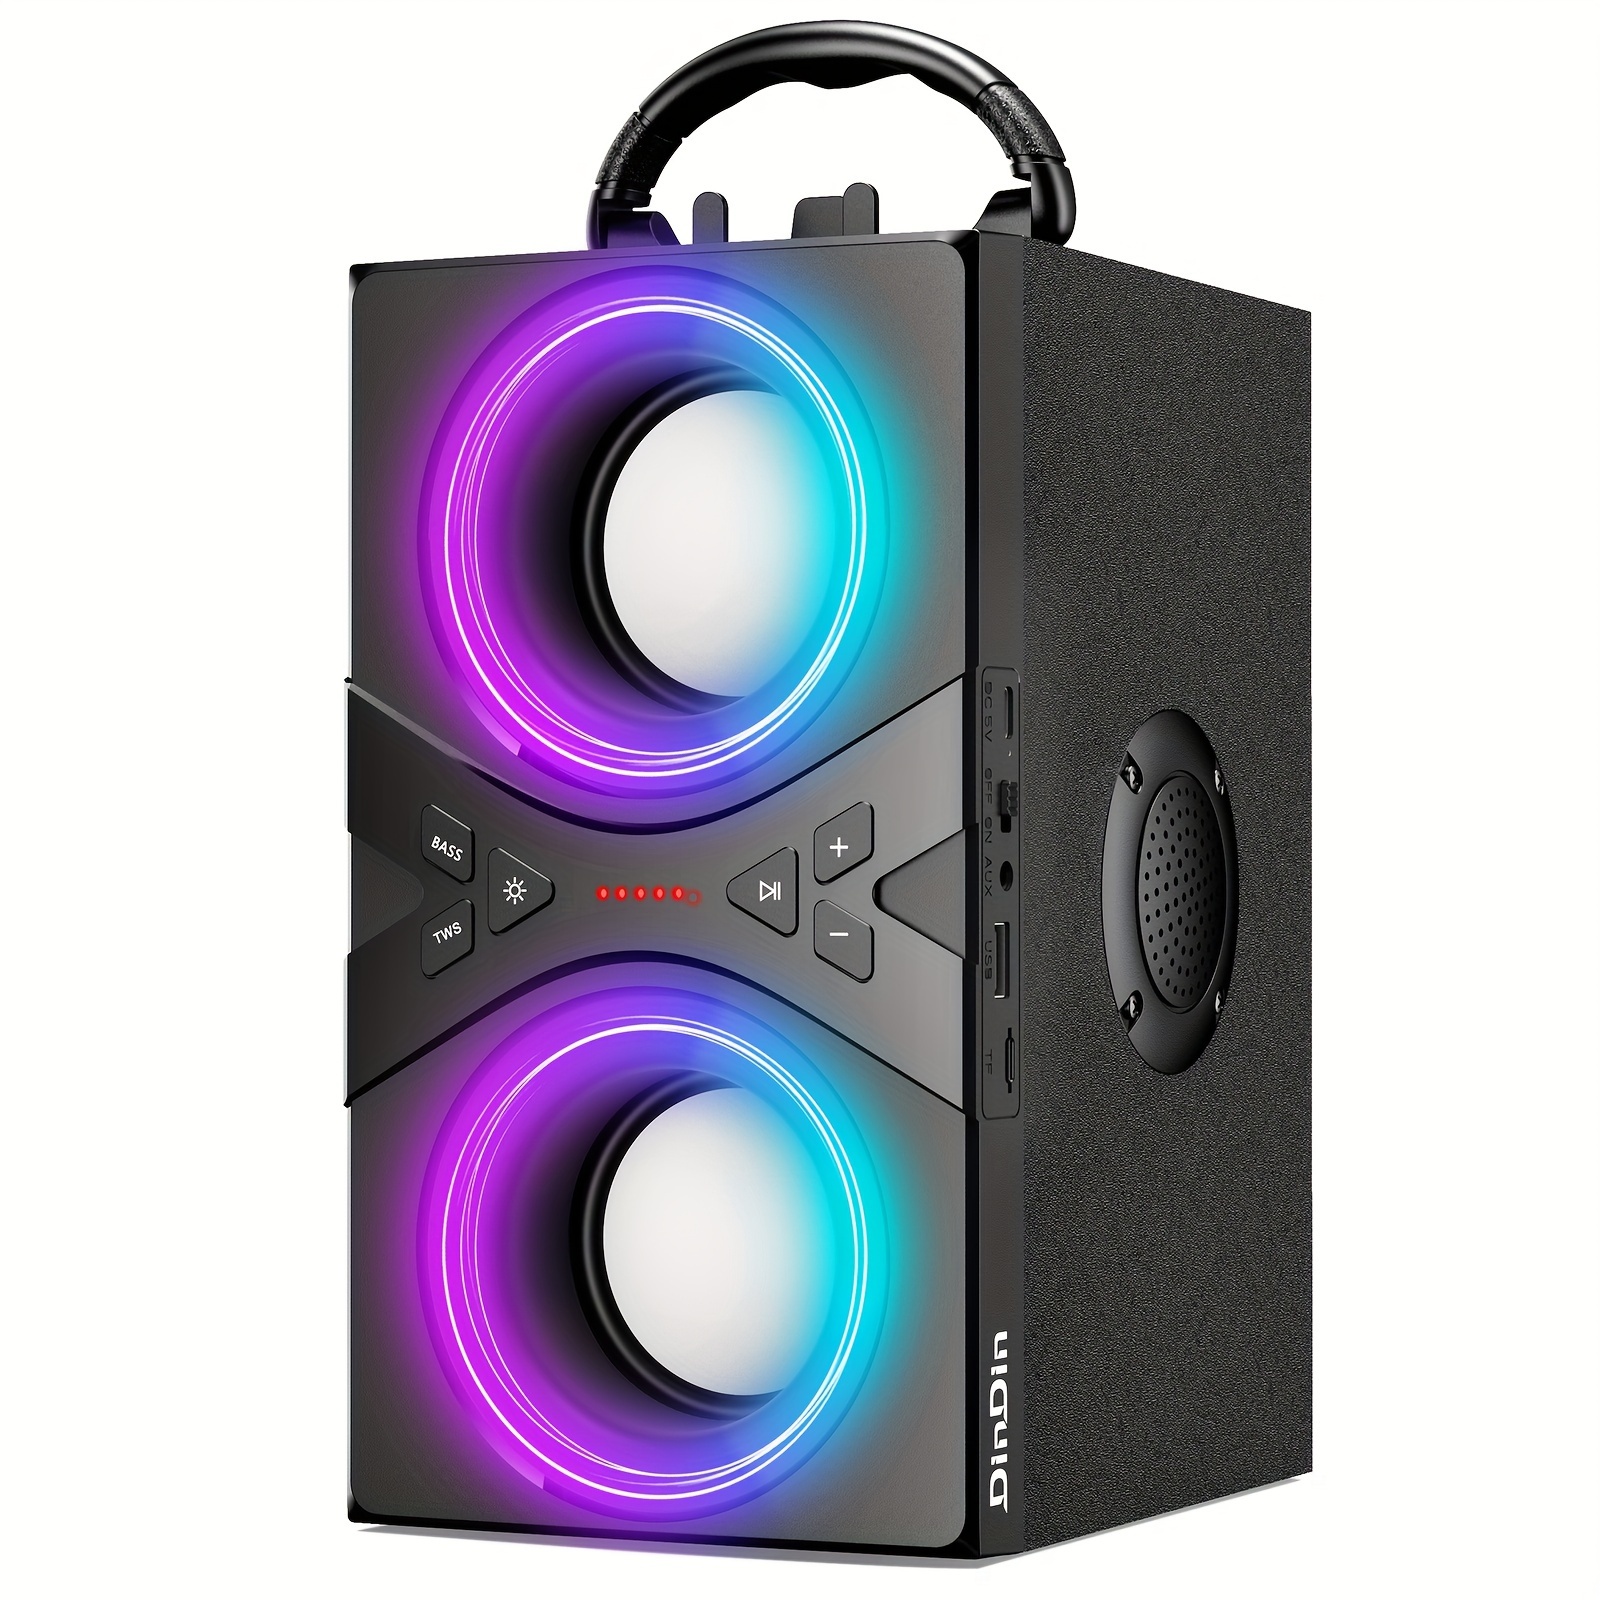 Altavoz externo inalámbrico Zealot S32 Bluetooth 5.0 Soundbox